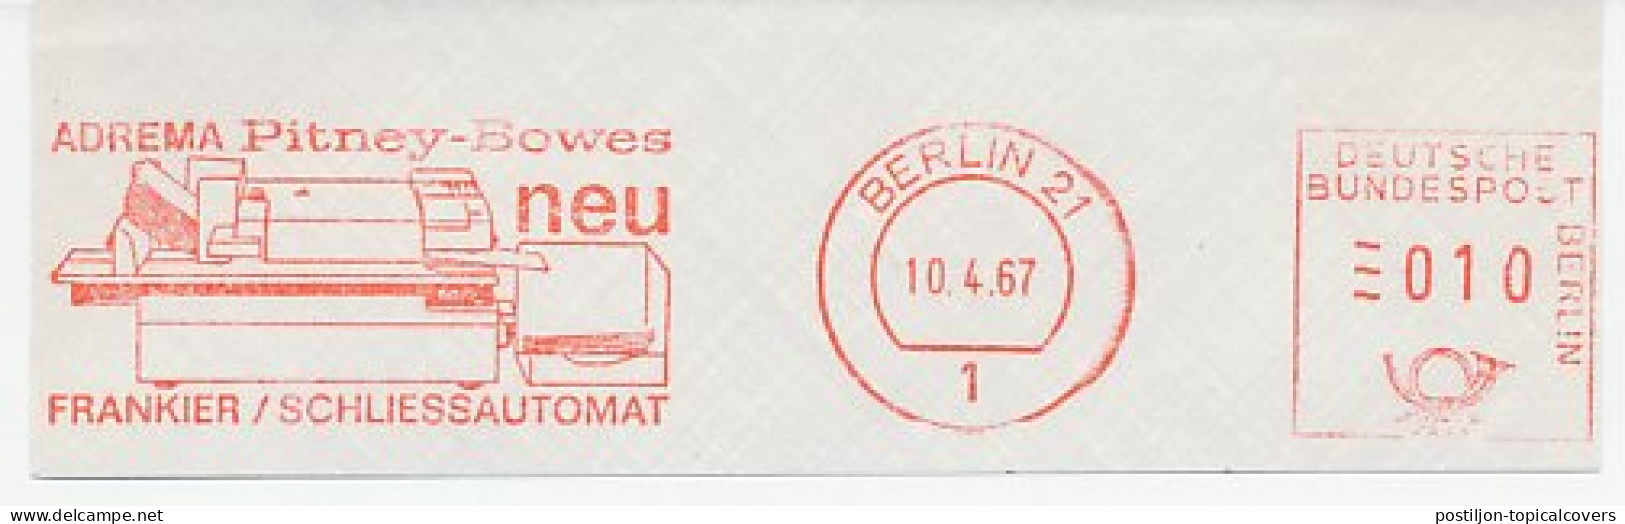 Meter Cut Germany 1967 Pitney Bowes- Adrema - Franking Machine - Automaatzegels [ATM]